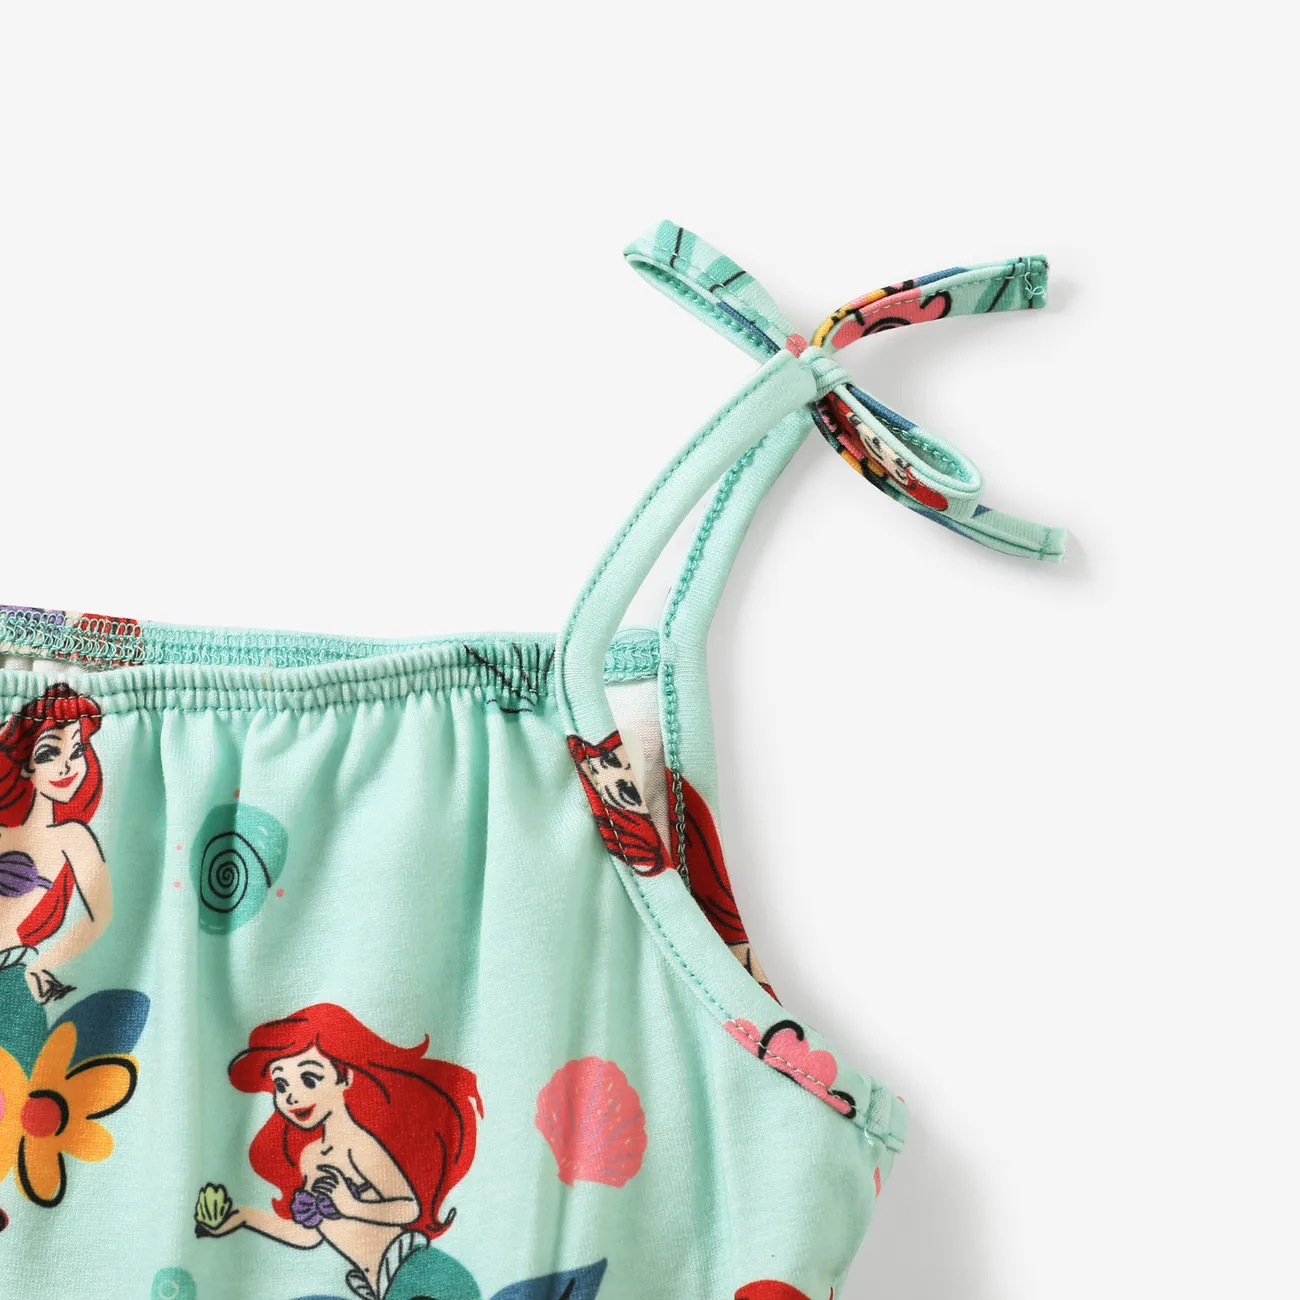 Disney Princess Moana/Ariel/Rapunzel 1pc Toddler Girls Naia™ Character Floral Print Spaghetti Strap Romper Green big image 1